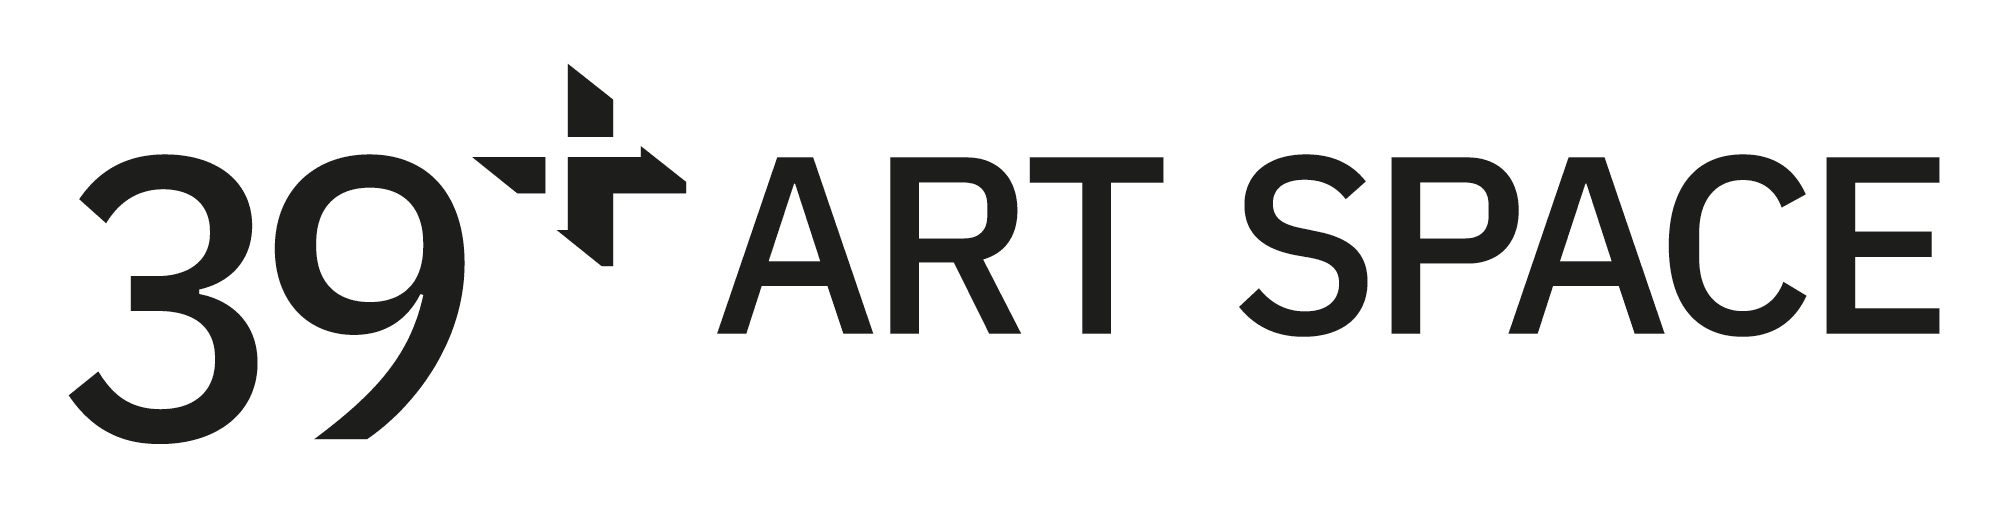 39+ Art Space company logo